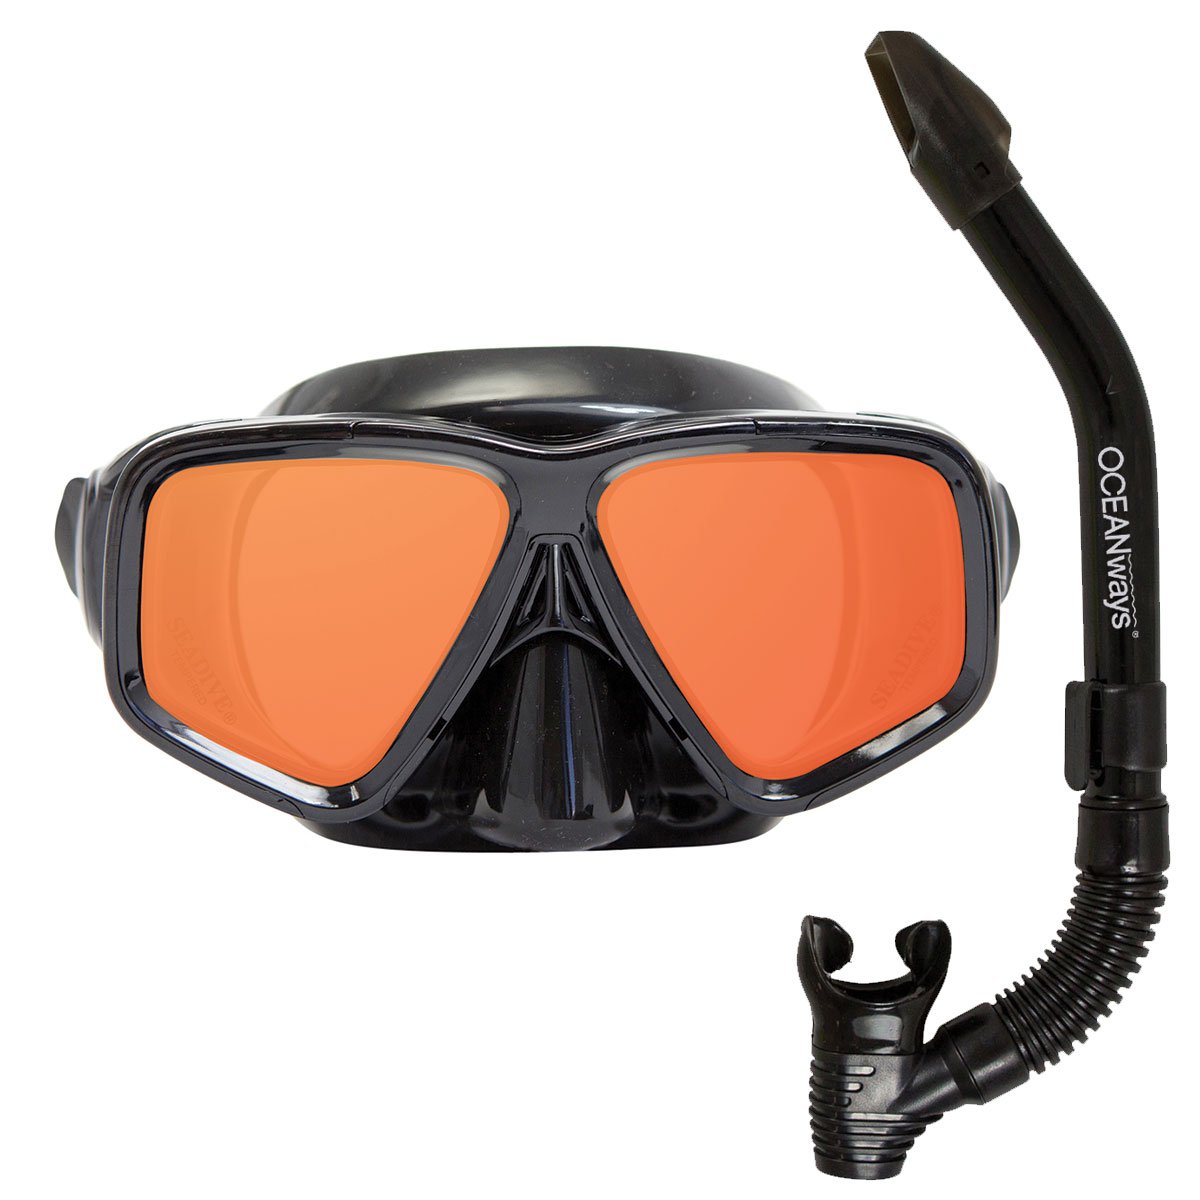 Oceanways SeeSharp Dry Snorkel and Mask Combo